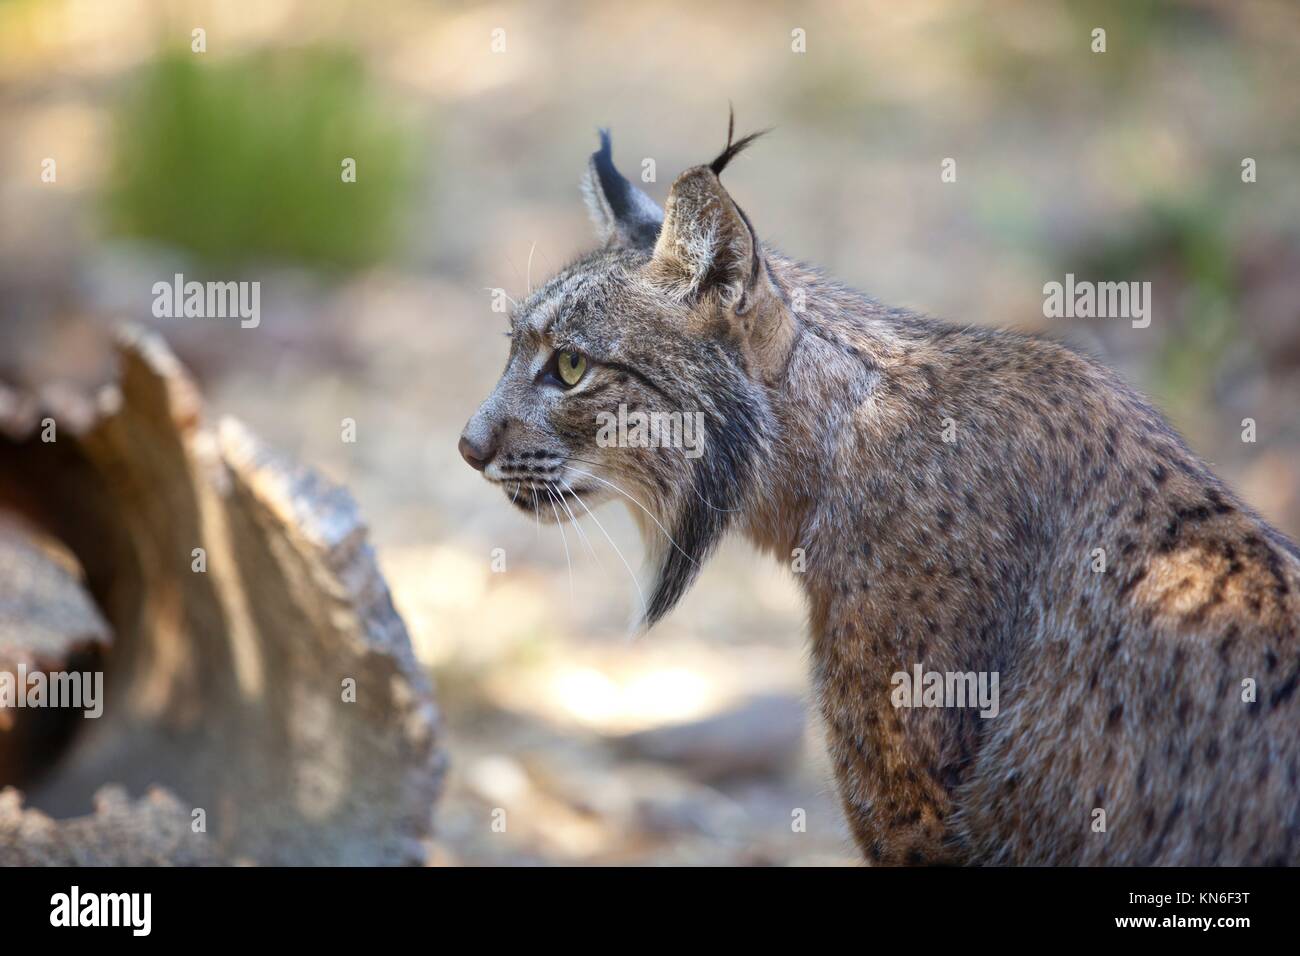 Iberian lynx or Lynx pardinus at wild life park. Stock Photo